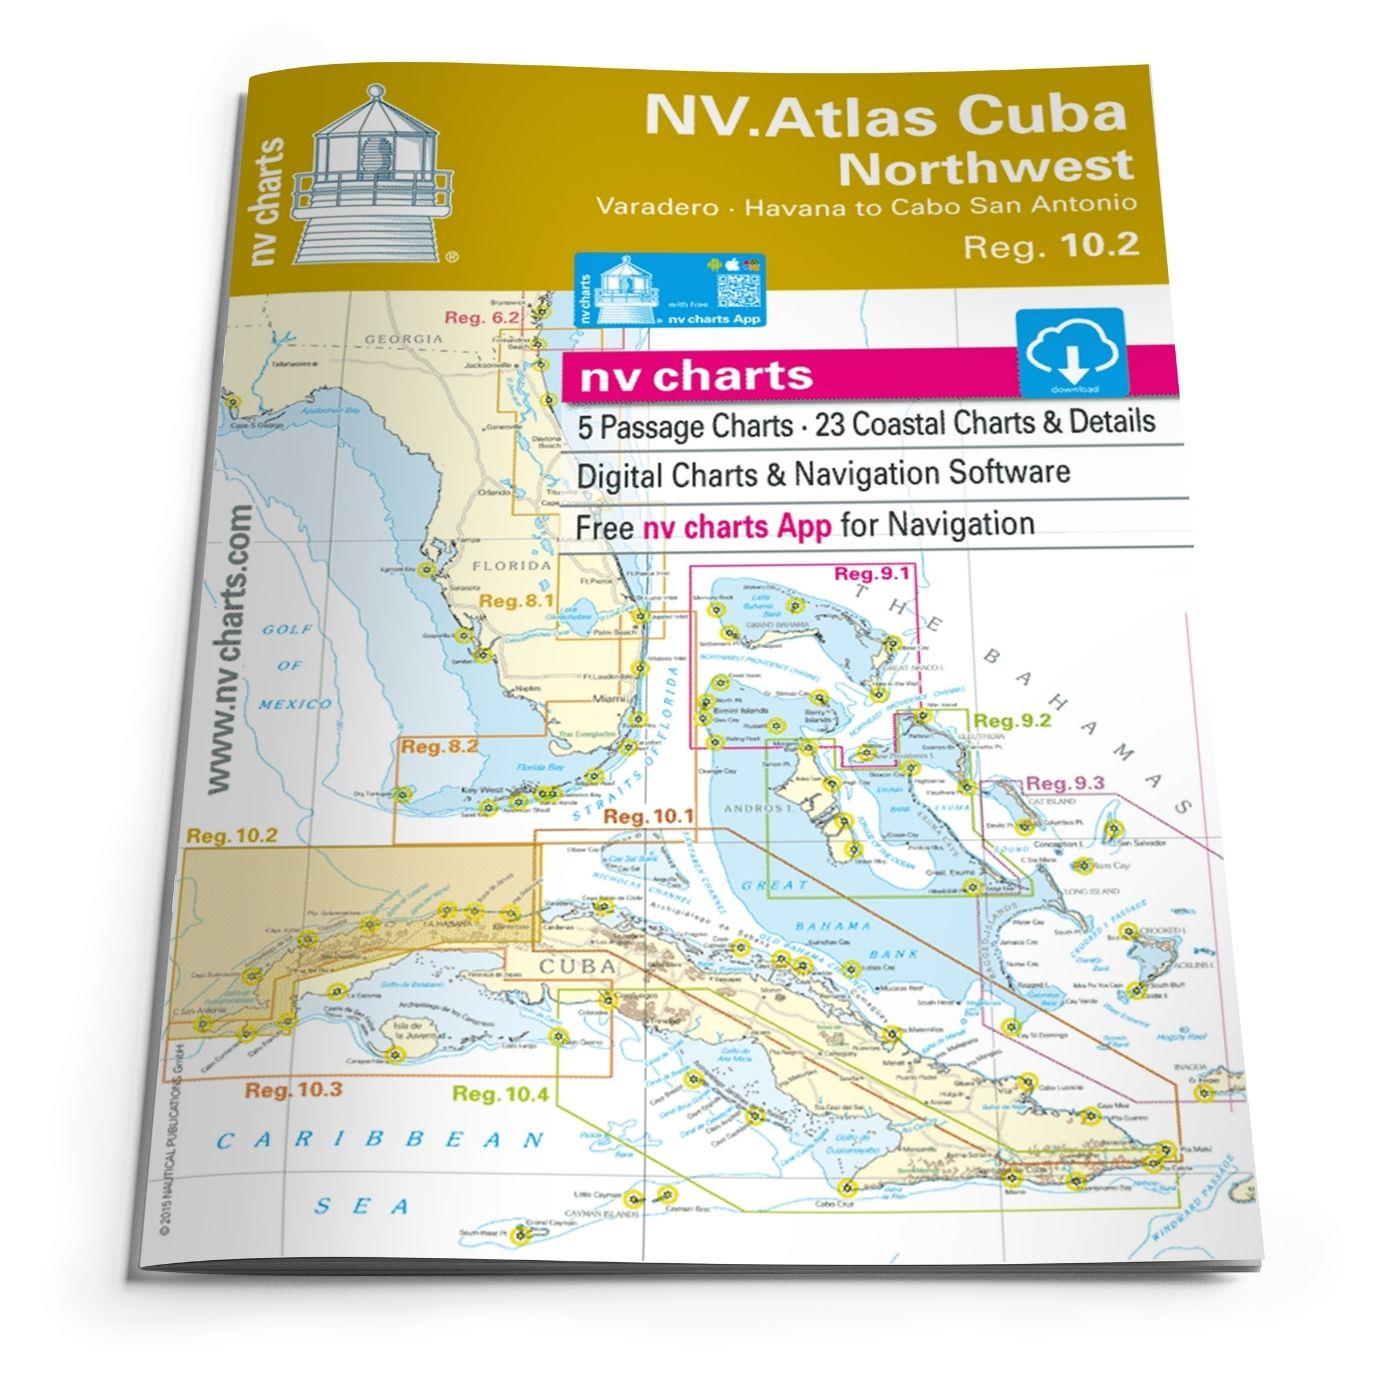 NV Charts Cuba 10.2 - Northwest - Varadero to Cabo San Antonio